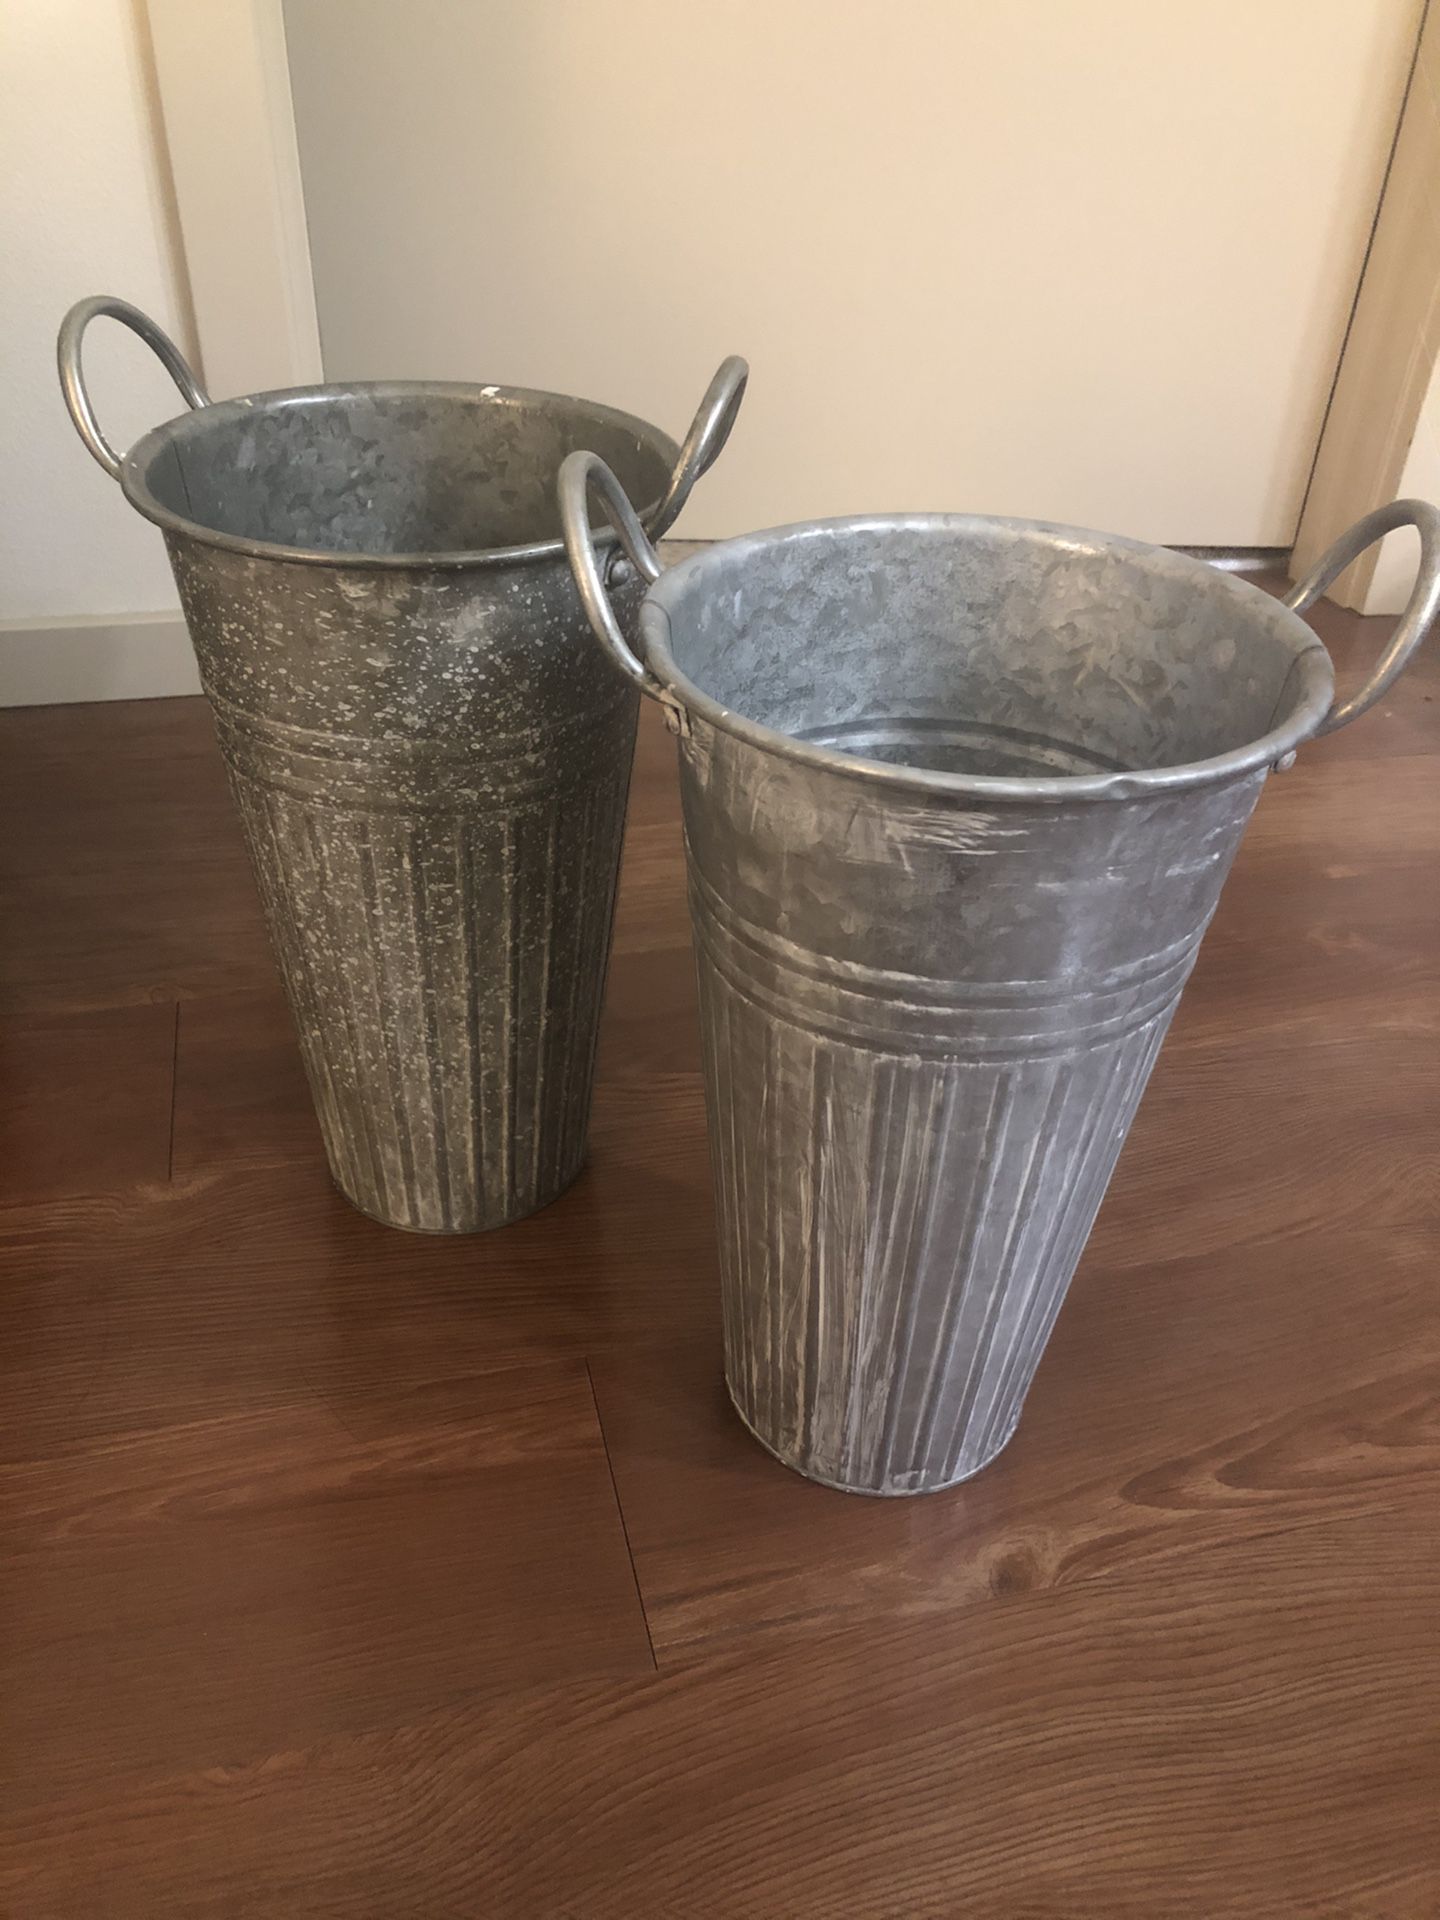 Galvanized buckets for weddings (sparklers, etc)